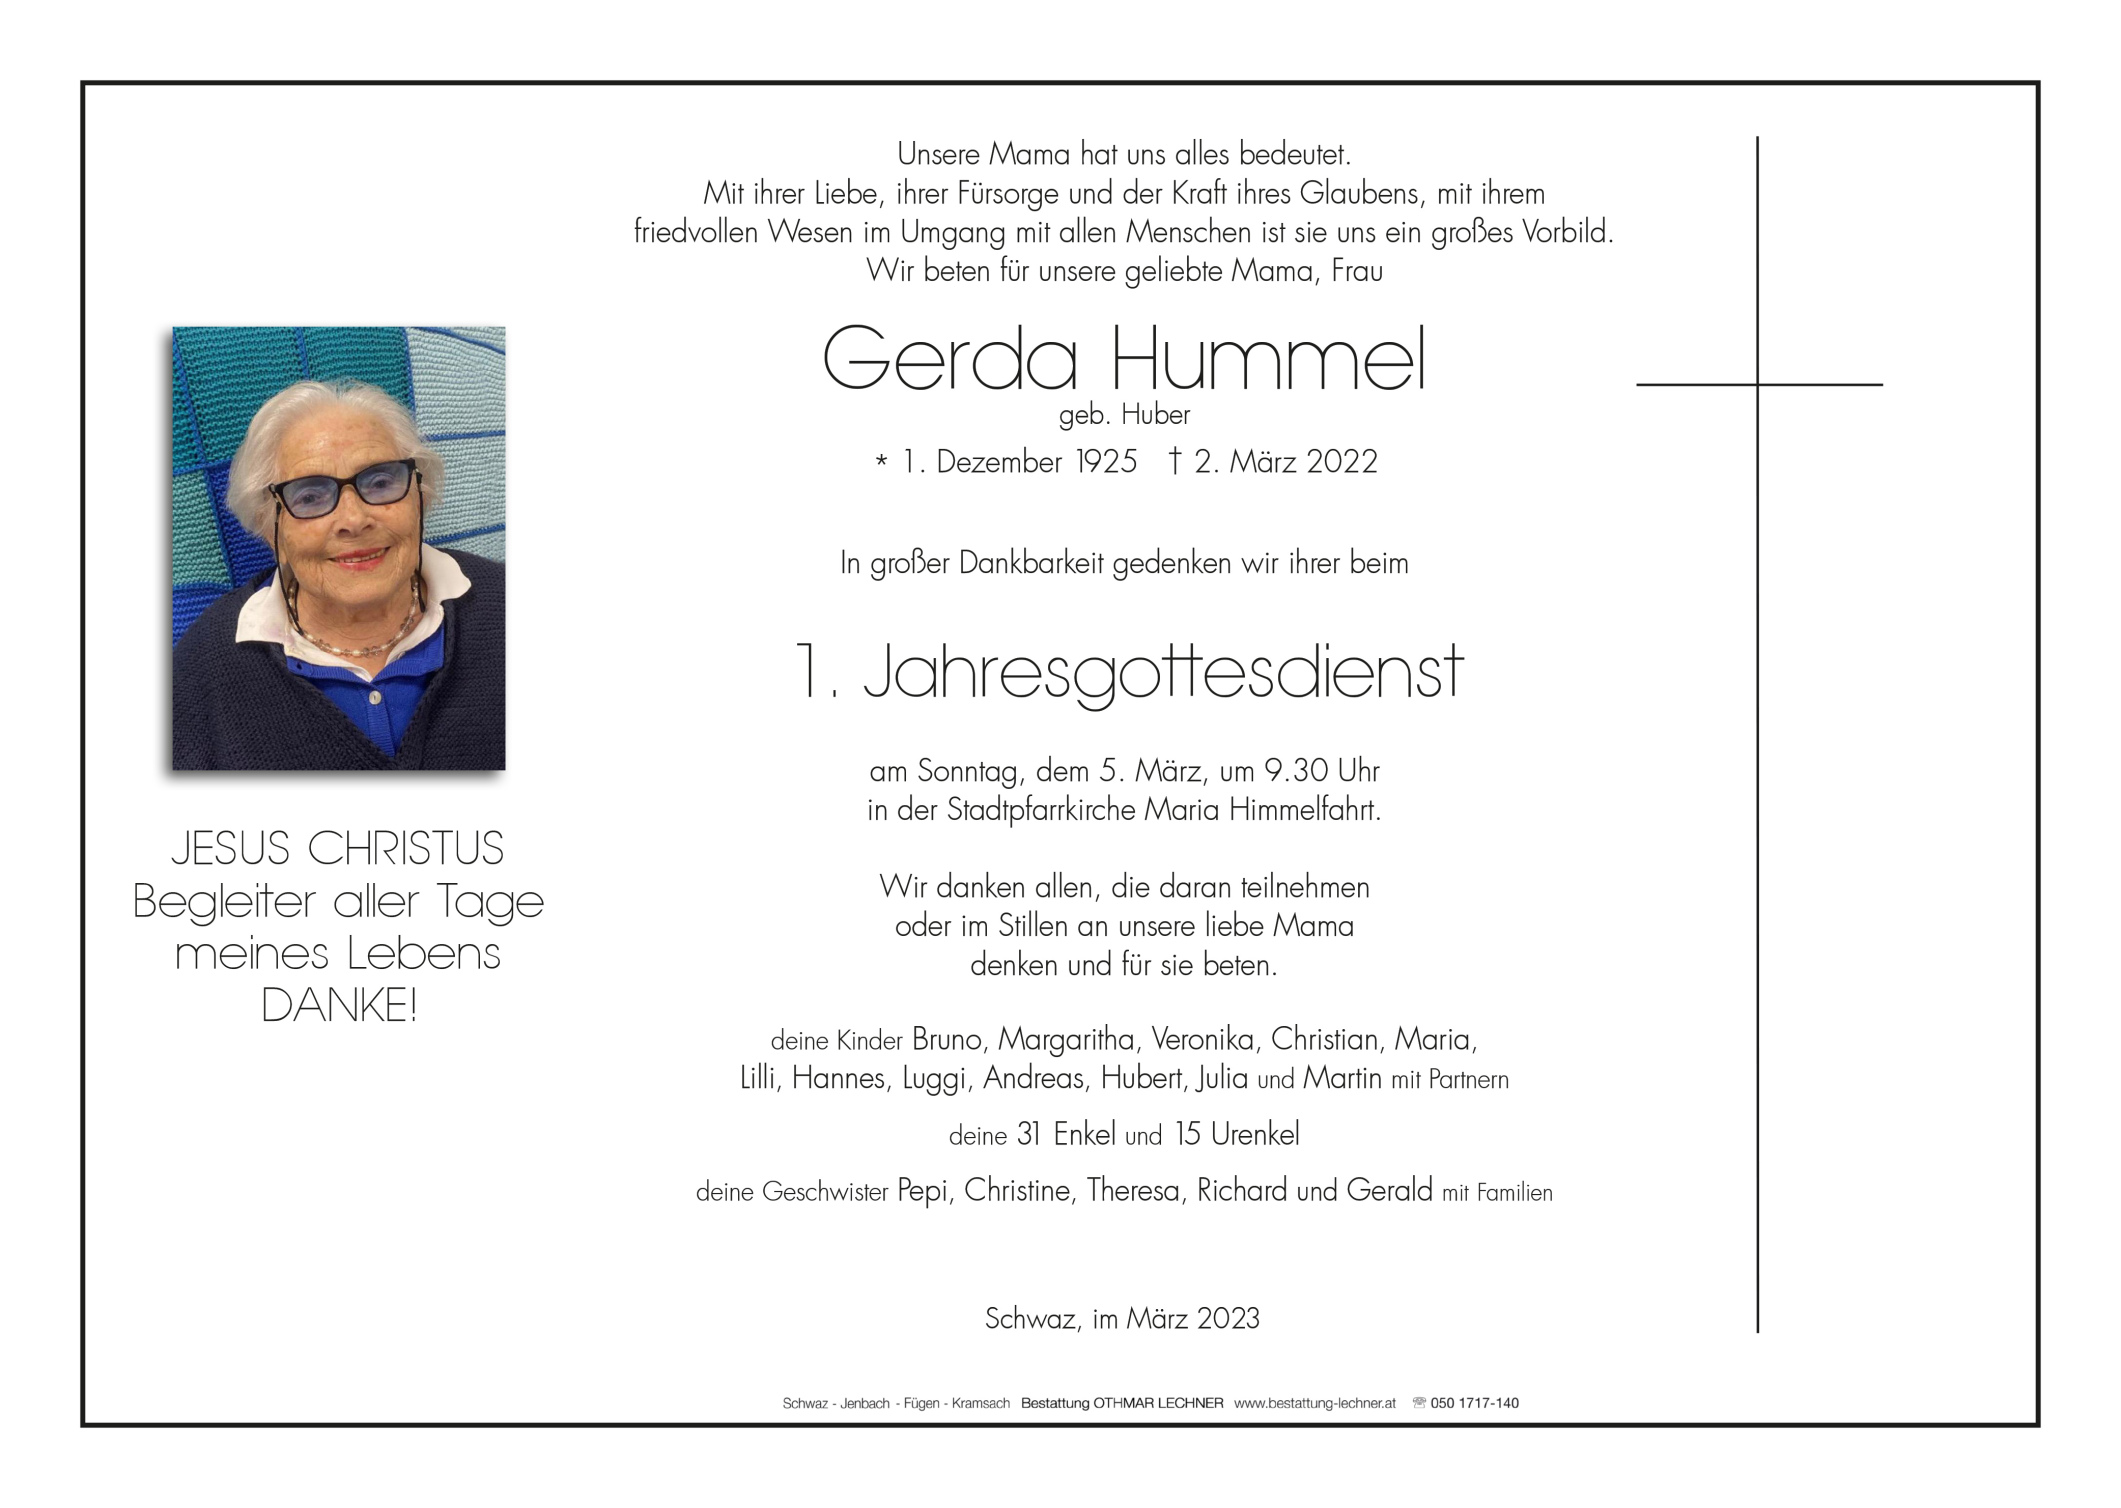 Gerda Hummel